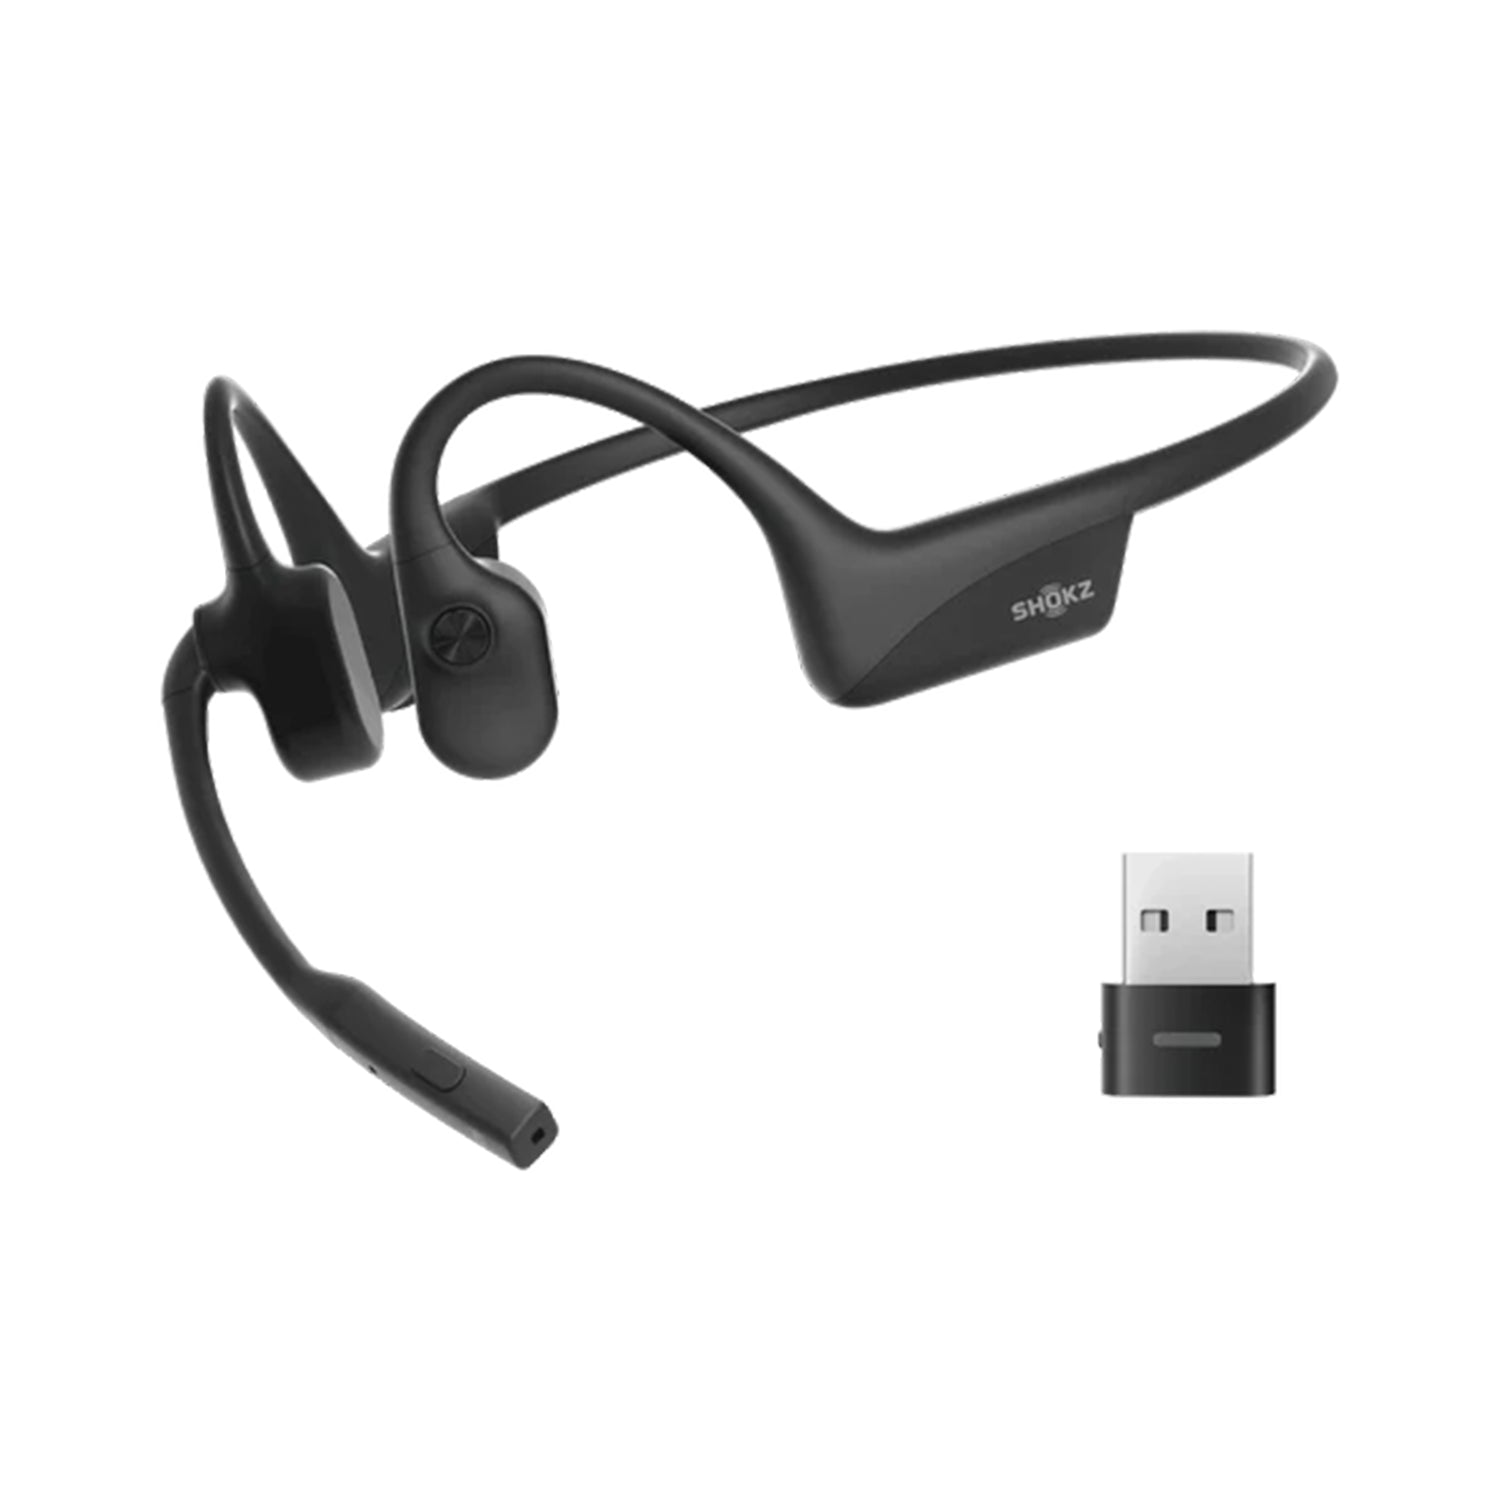 SHOKZ Opencomm 2 UC Open-Ear Bluetooth Headphones, 7th Generation Bone Conduction Technology With Adjustable Microphone